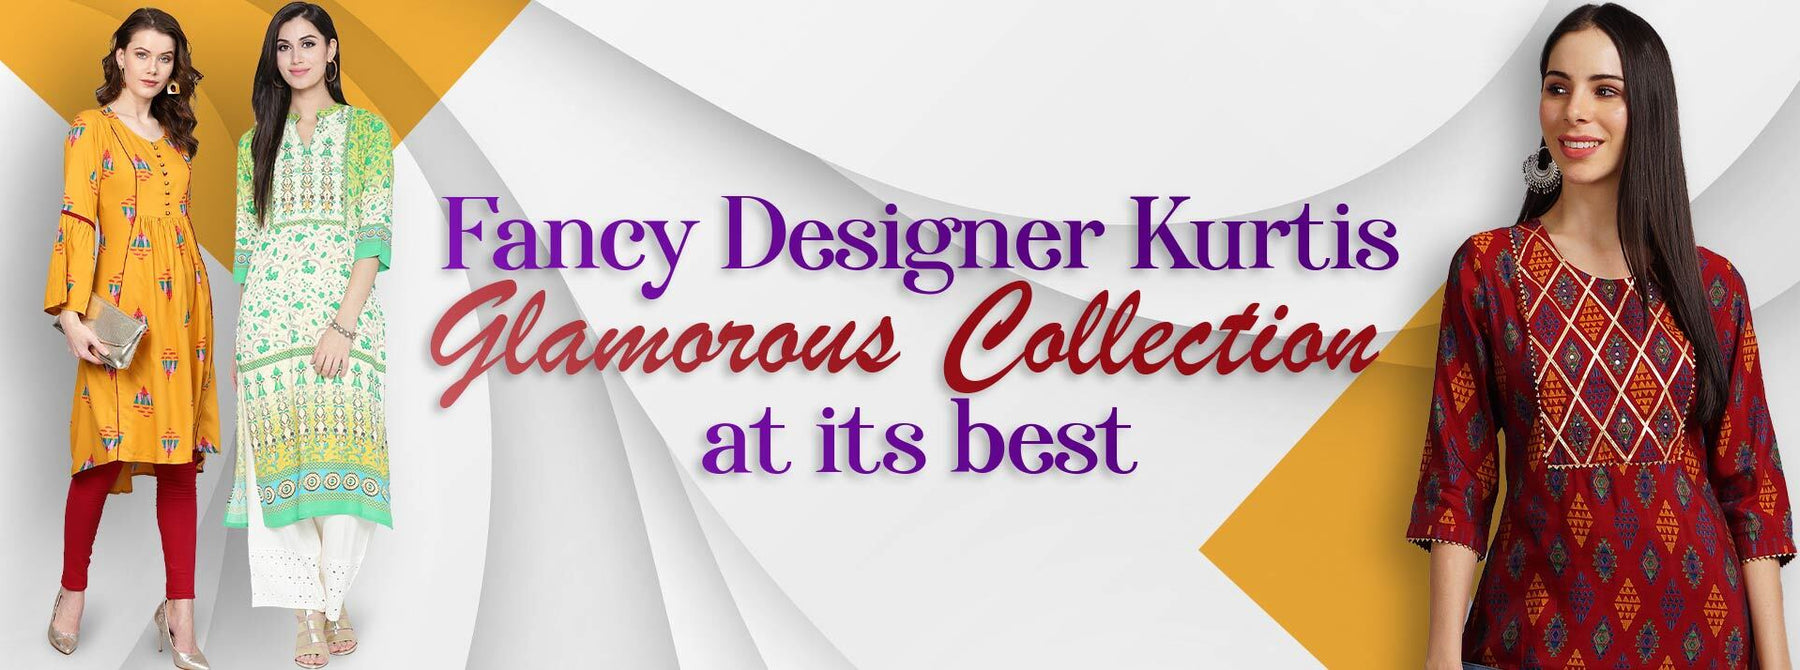 Fancy Designer Kurtis Glamorous Collection at its best